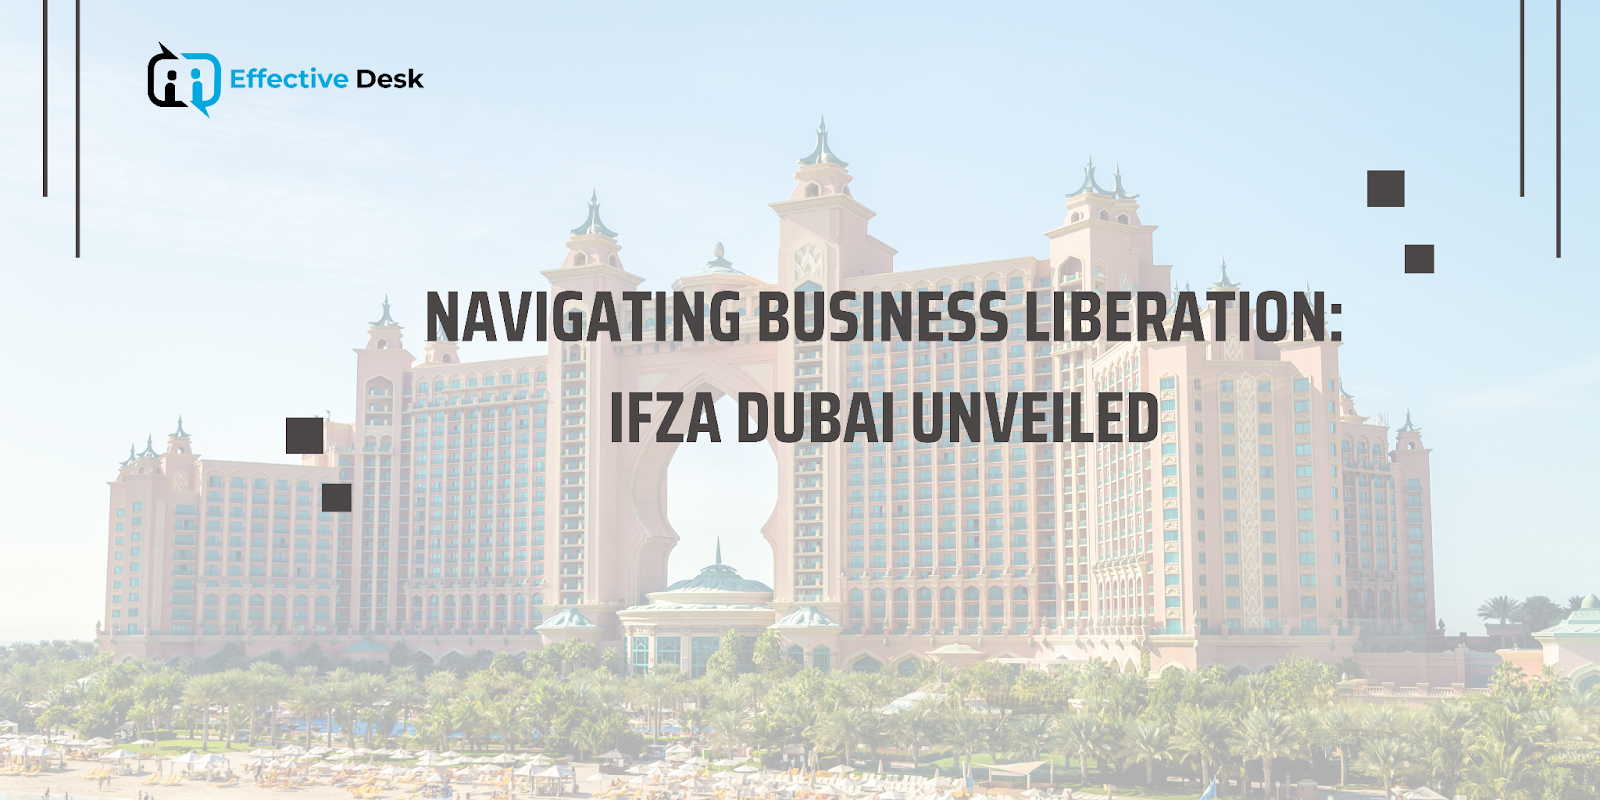 
Navigating Business Liberation: IFZA Dubai Unveiled
